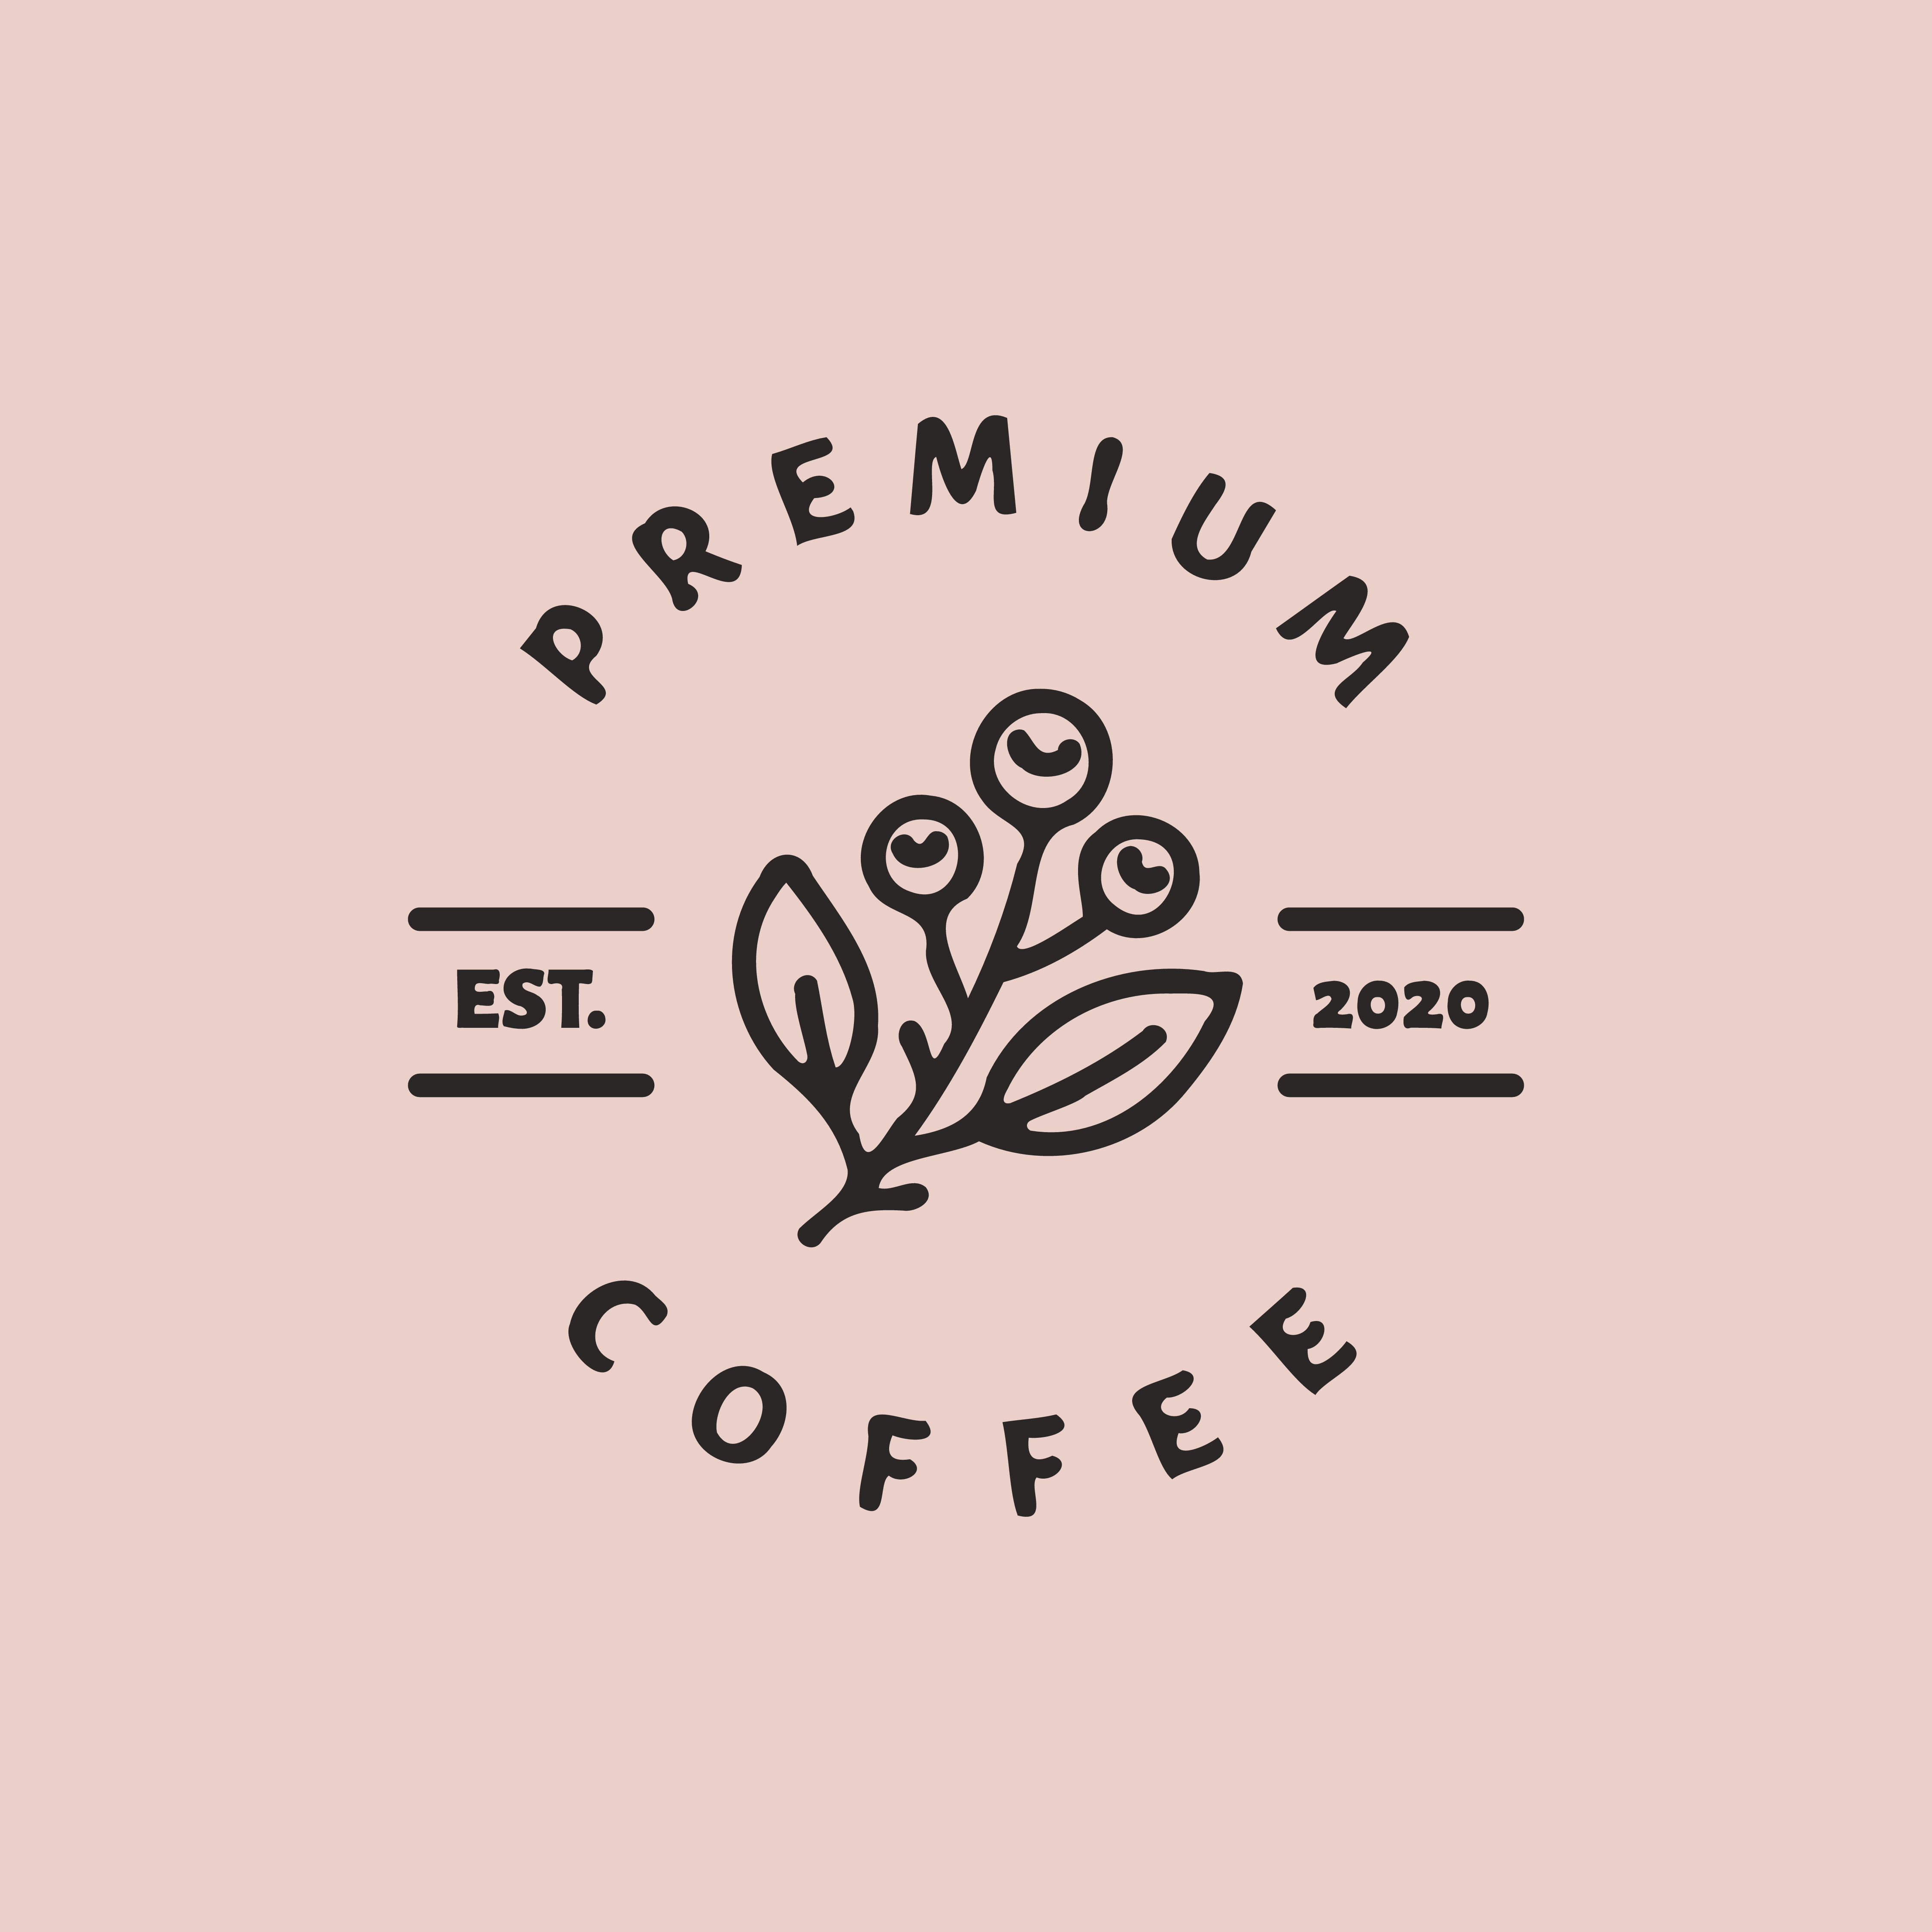 Ori 3672092 Tq7j8qzme3cguygf5vioqb5ahm11c0se6k55sevt Coffee Shop Logo Template Vector For Premium Coffee Business 